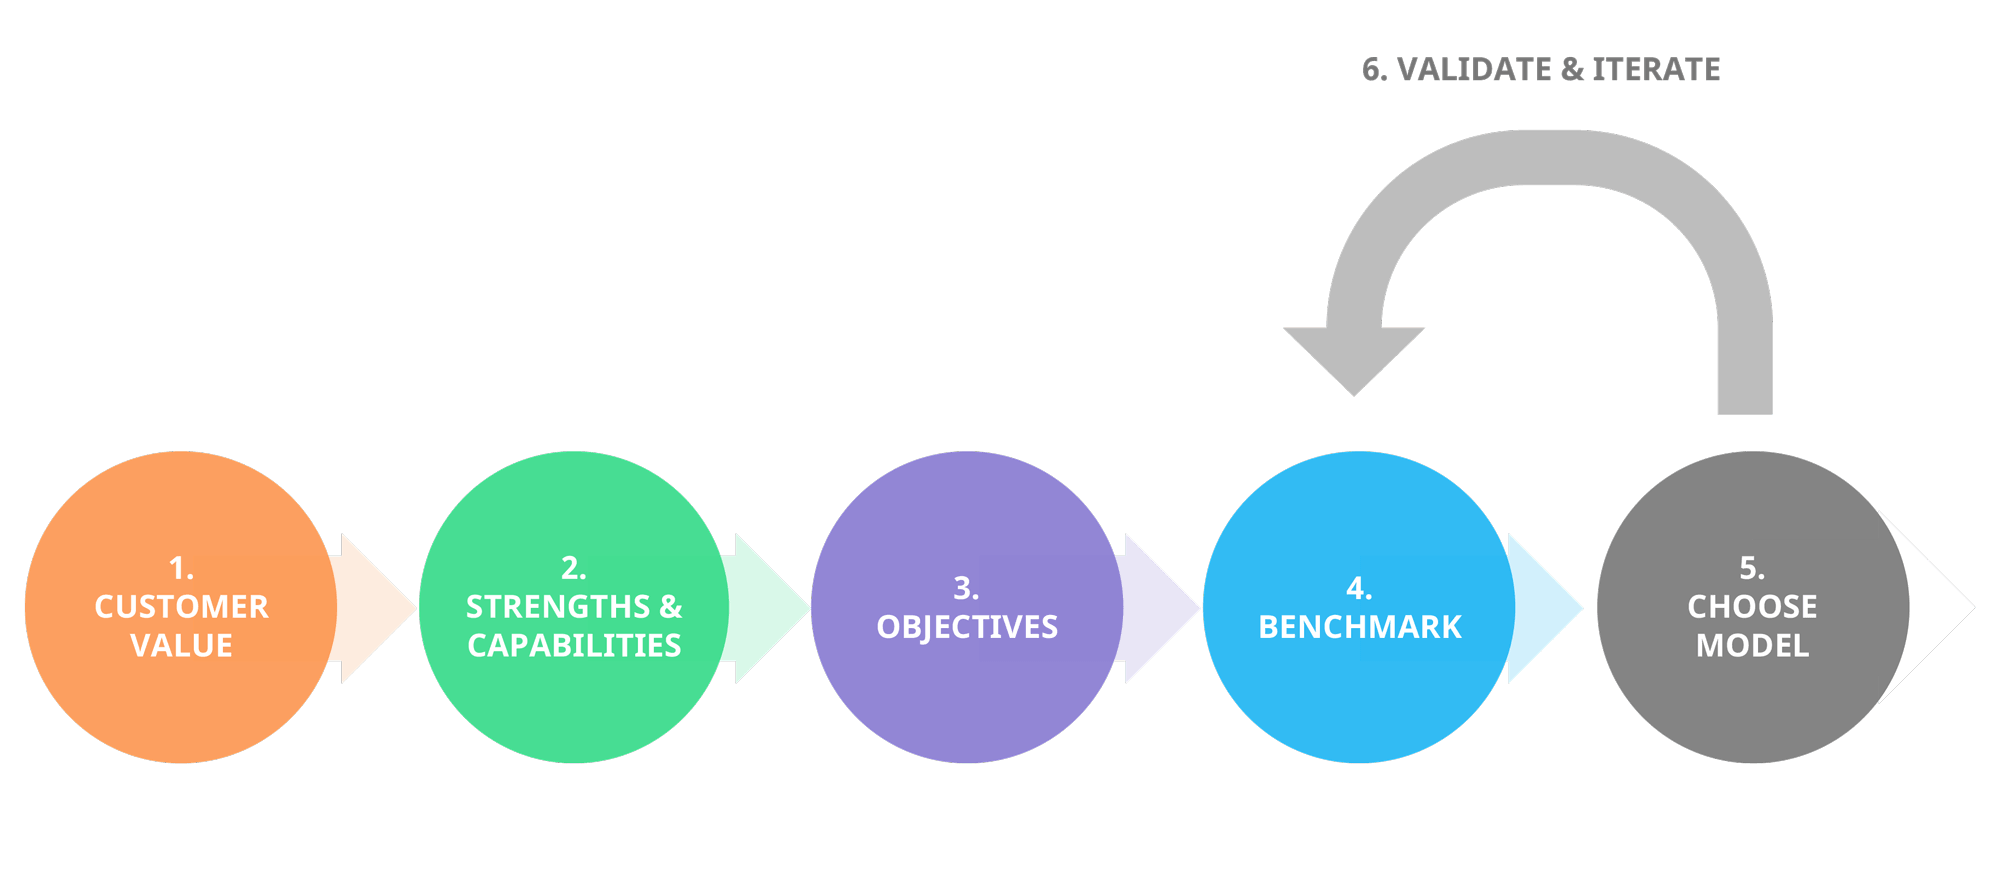 characteristics of business model innovation